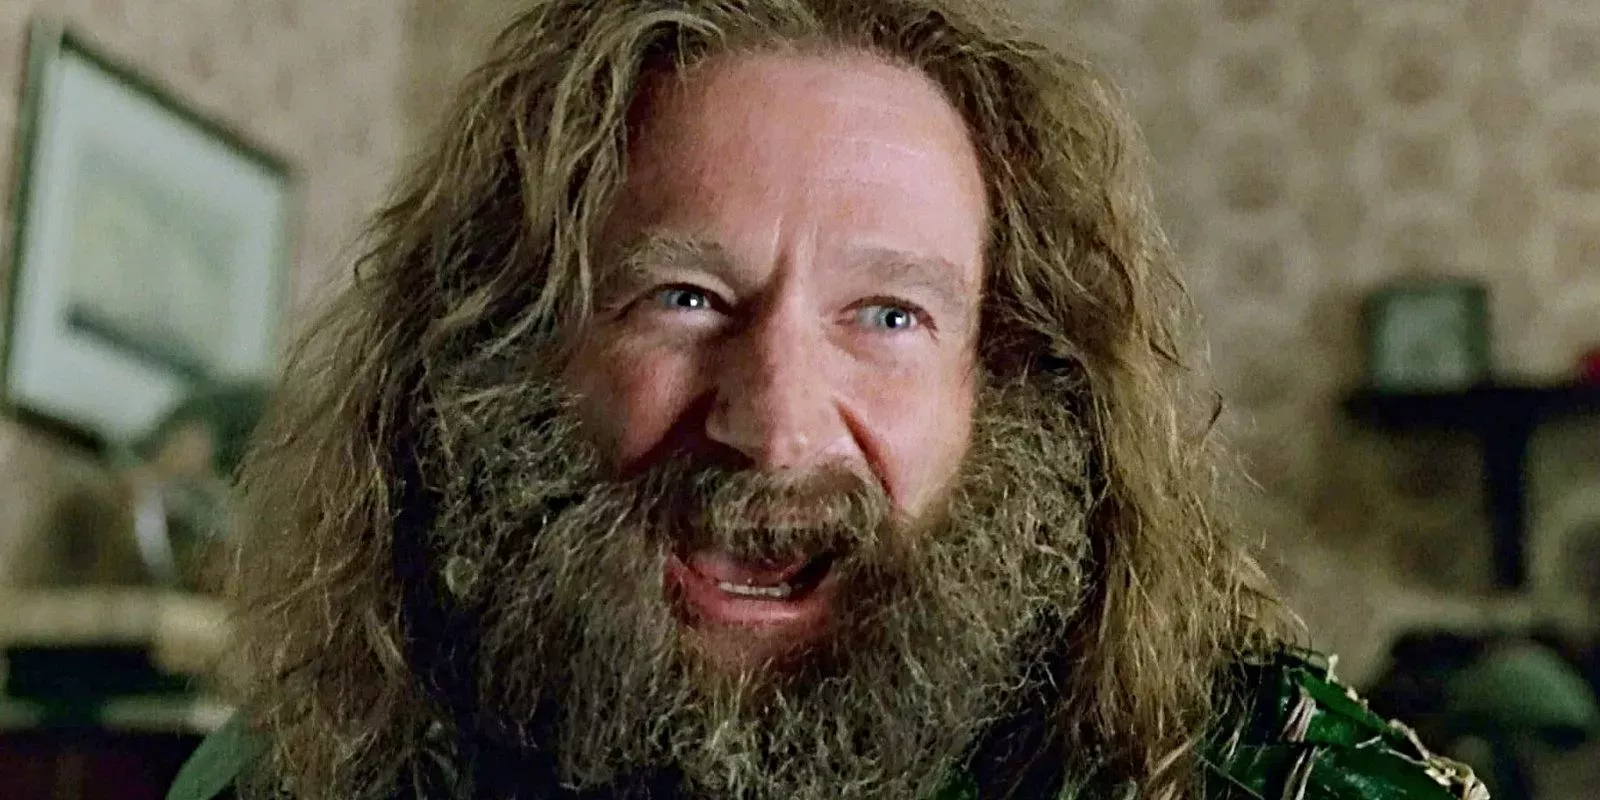 Robin Williams laughing as Alan Parrish in the original Jumanji movie